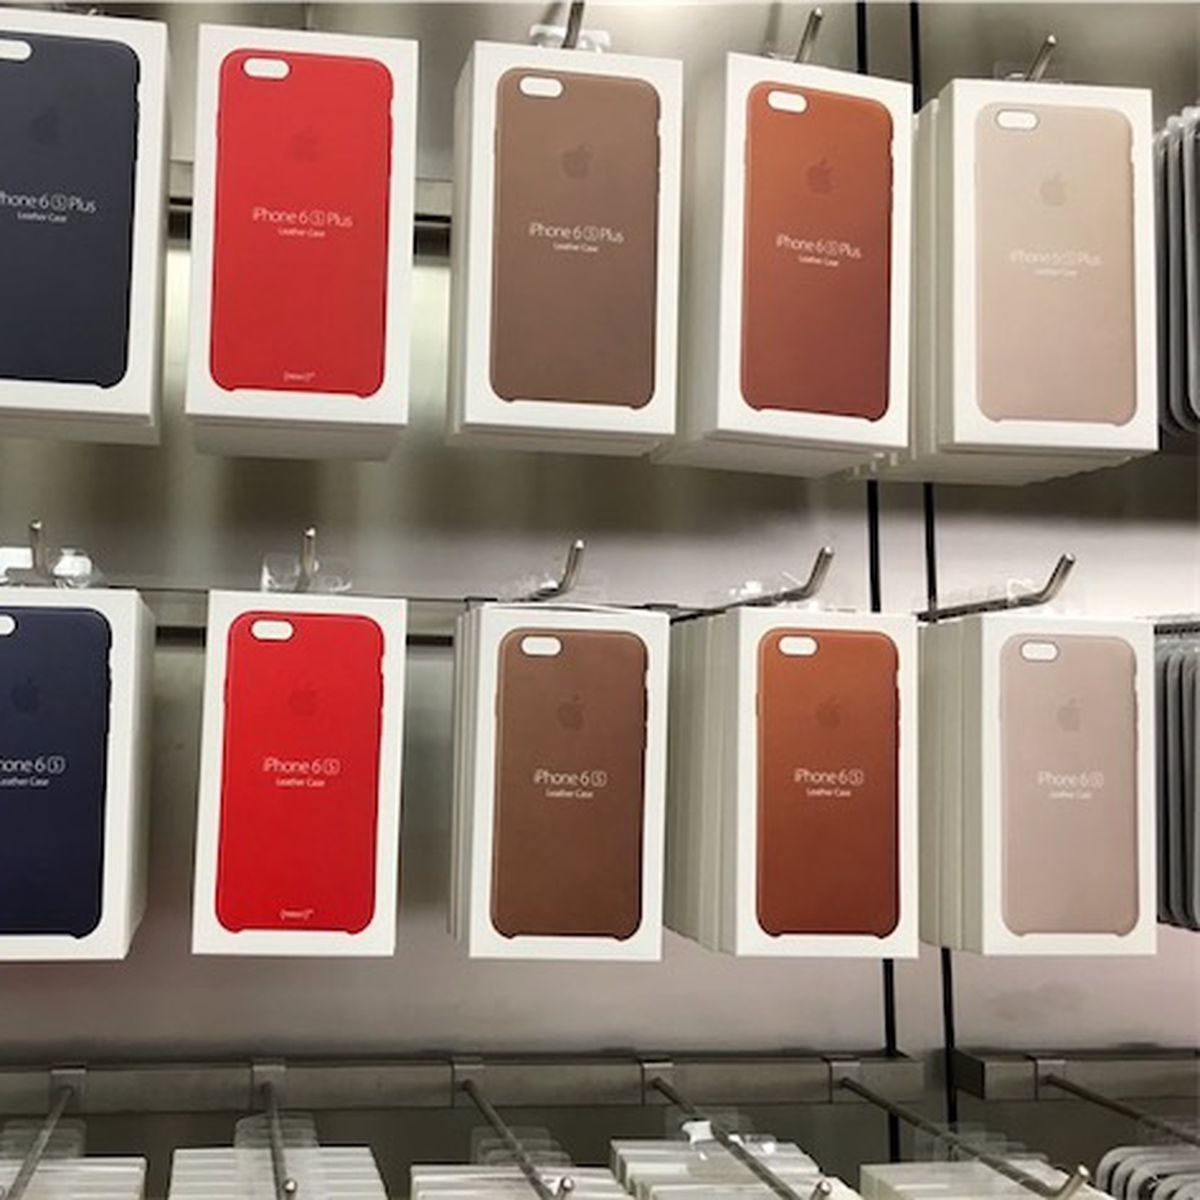 Iphone 6 product Red. Красный чехол на айфон 6. Комплектация айфон 6s красный. Apple Store Cases. Гб стор айфон